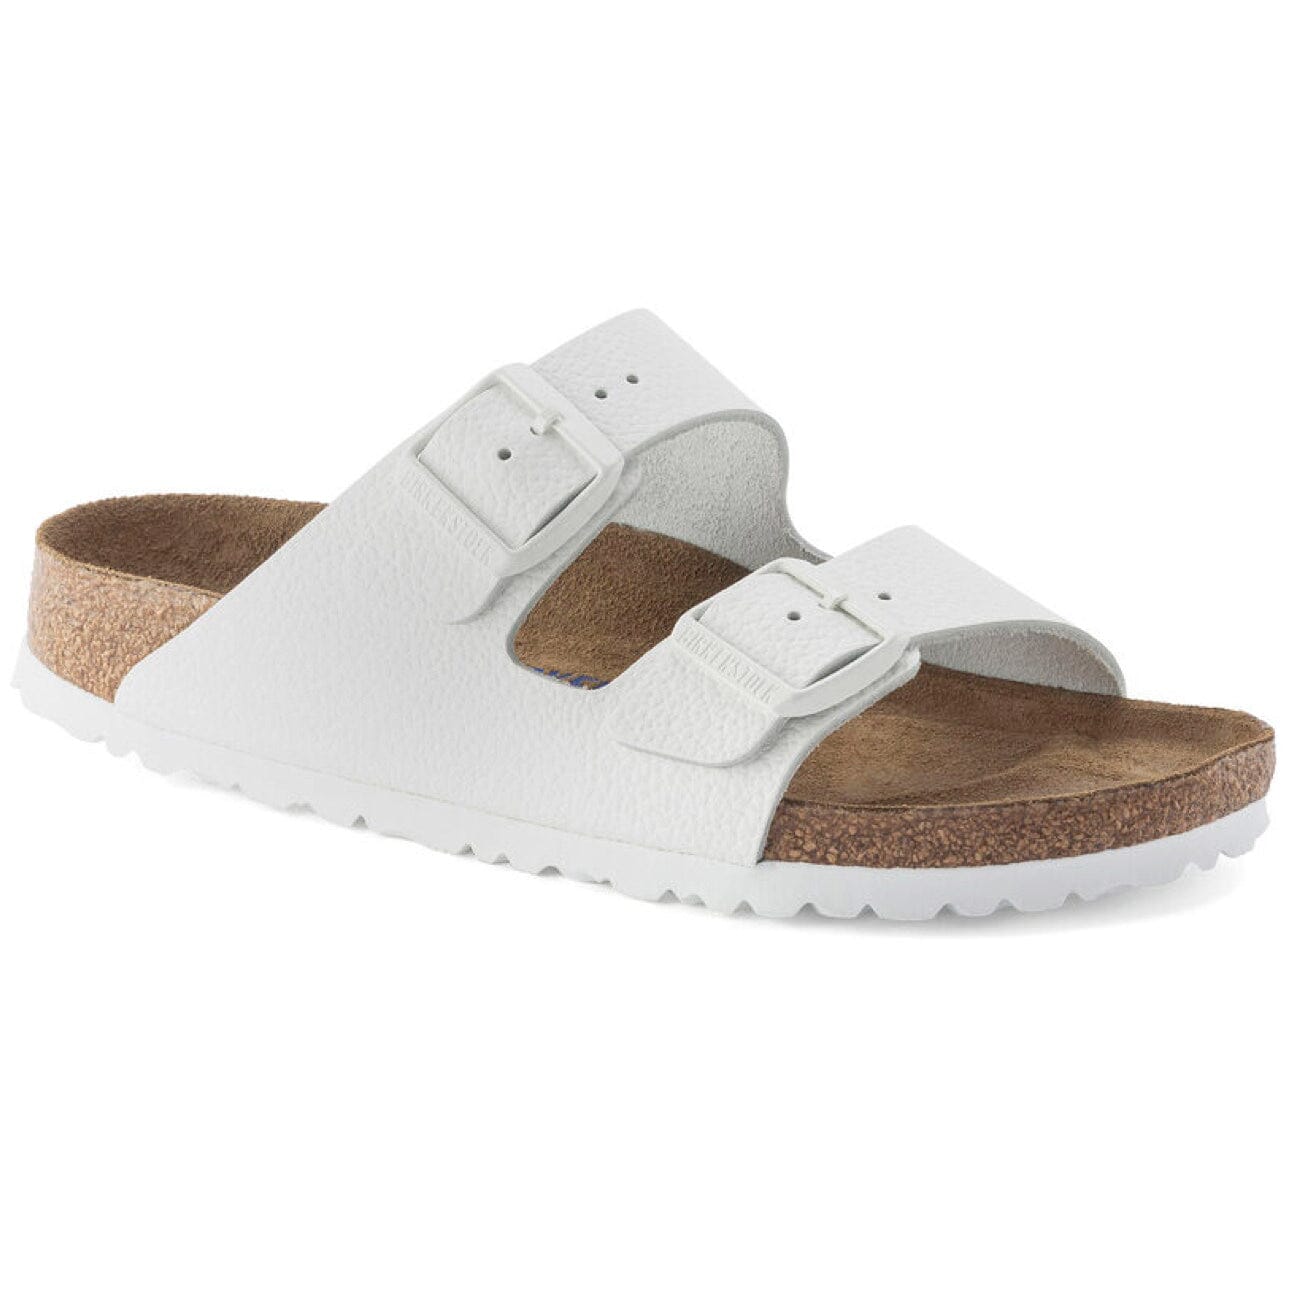 Birkenstock Arizona SFB, White Smooth Leather, Regular Fit Sandals Birkenstock Premium White 35 